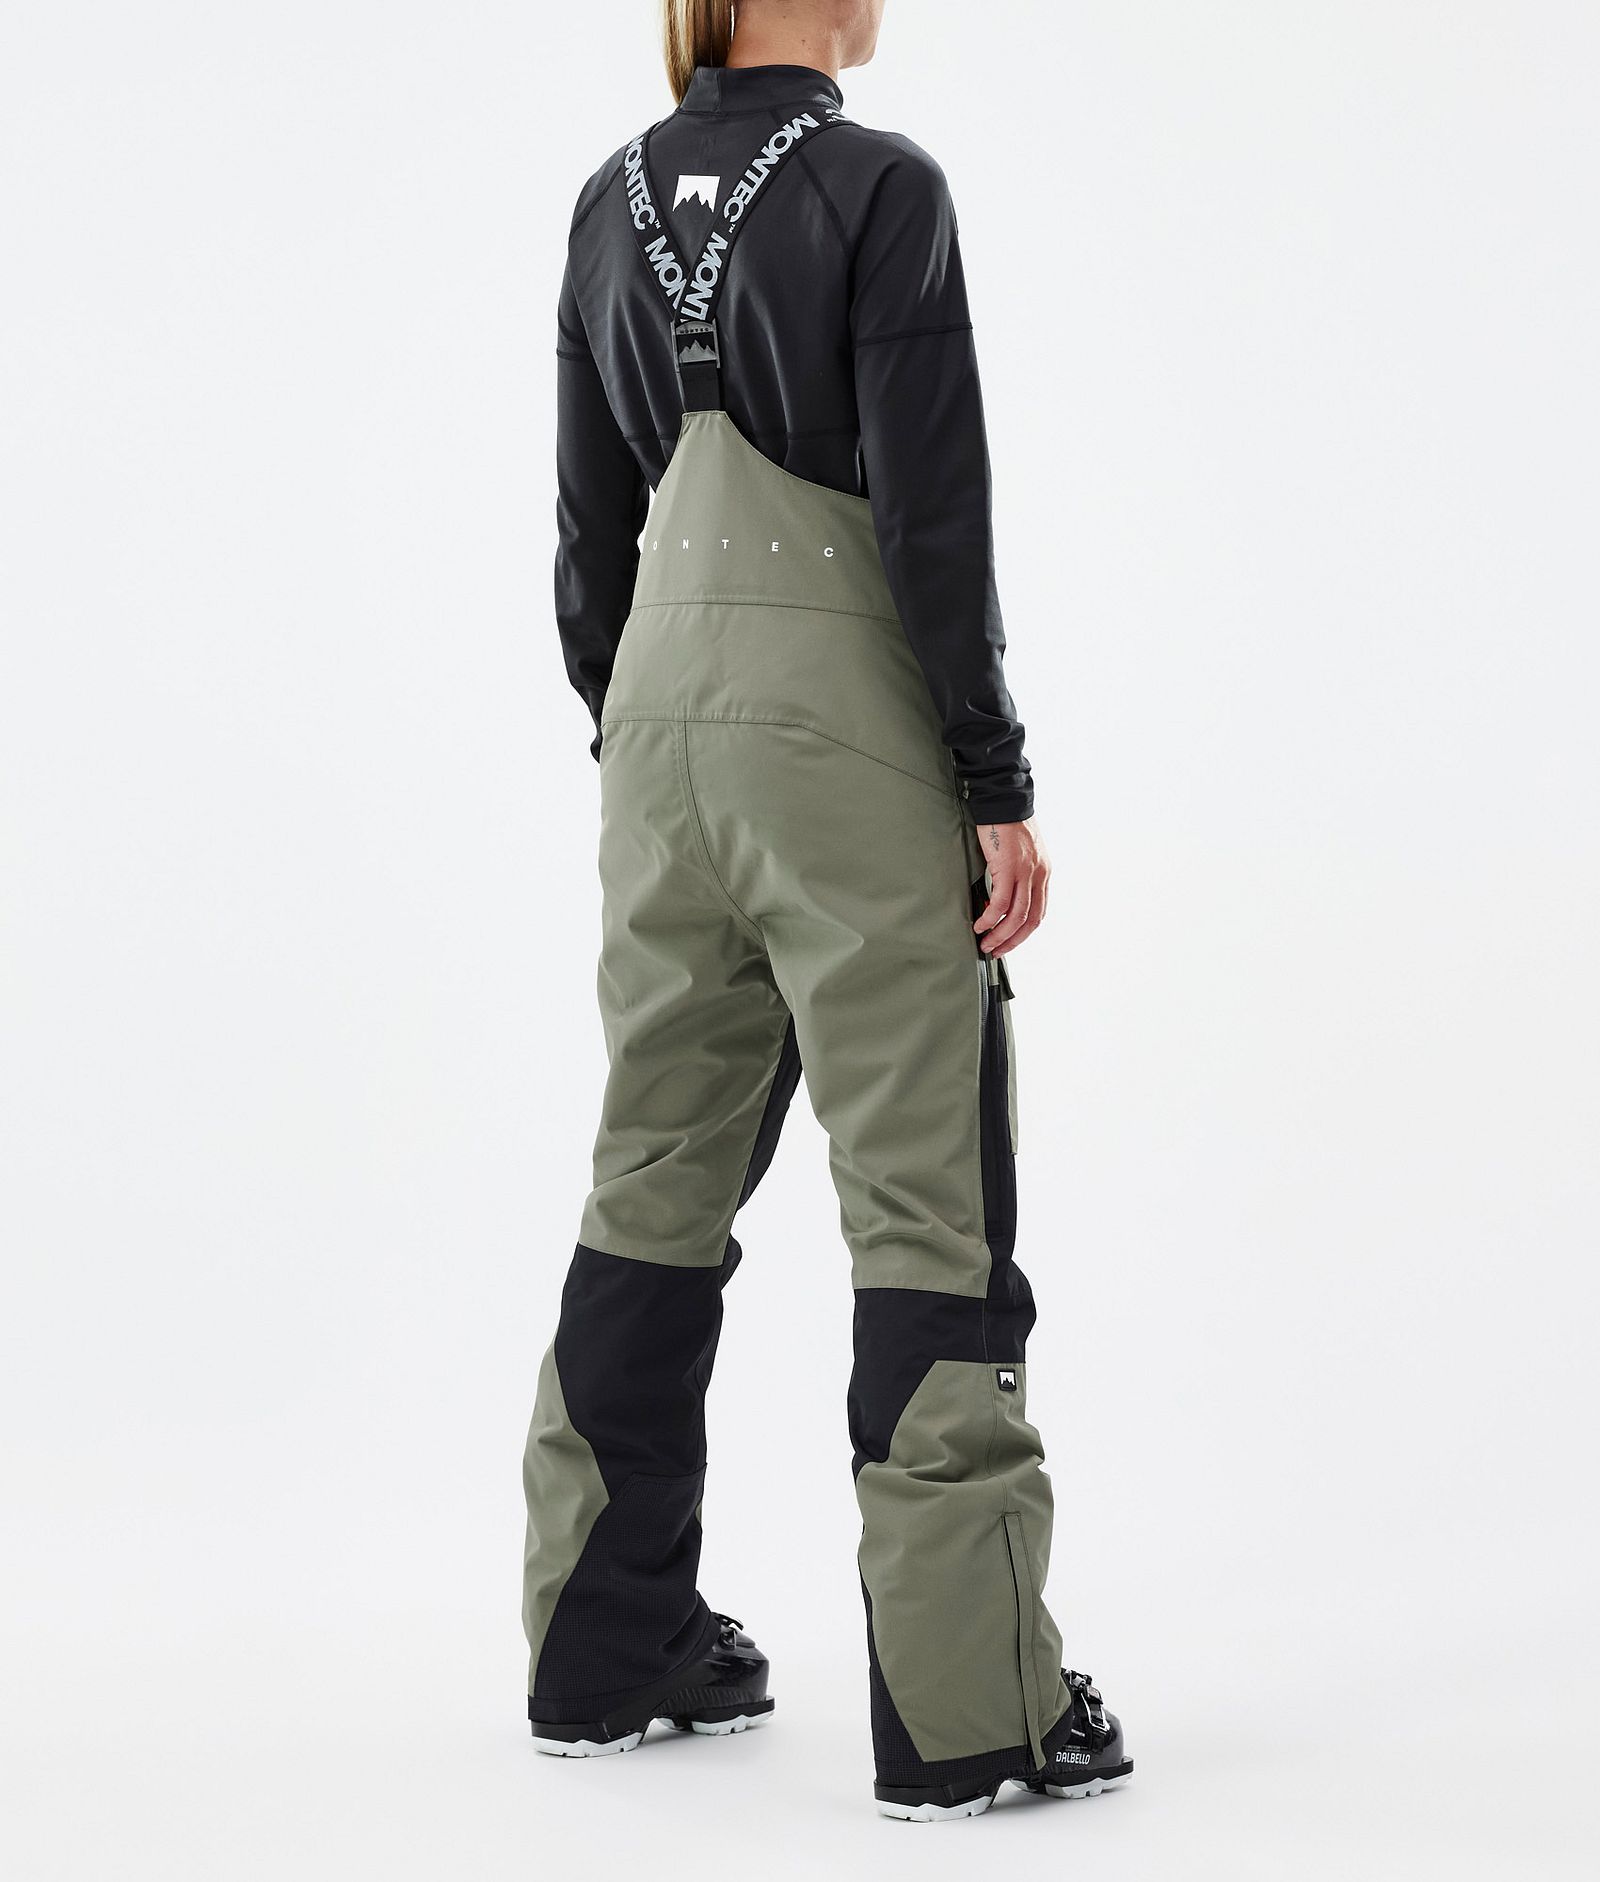 Montec Fawk W Ski Pants Women Greenish/Black | Montecwear.com